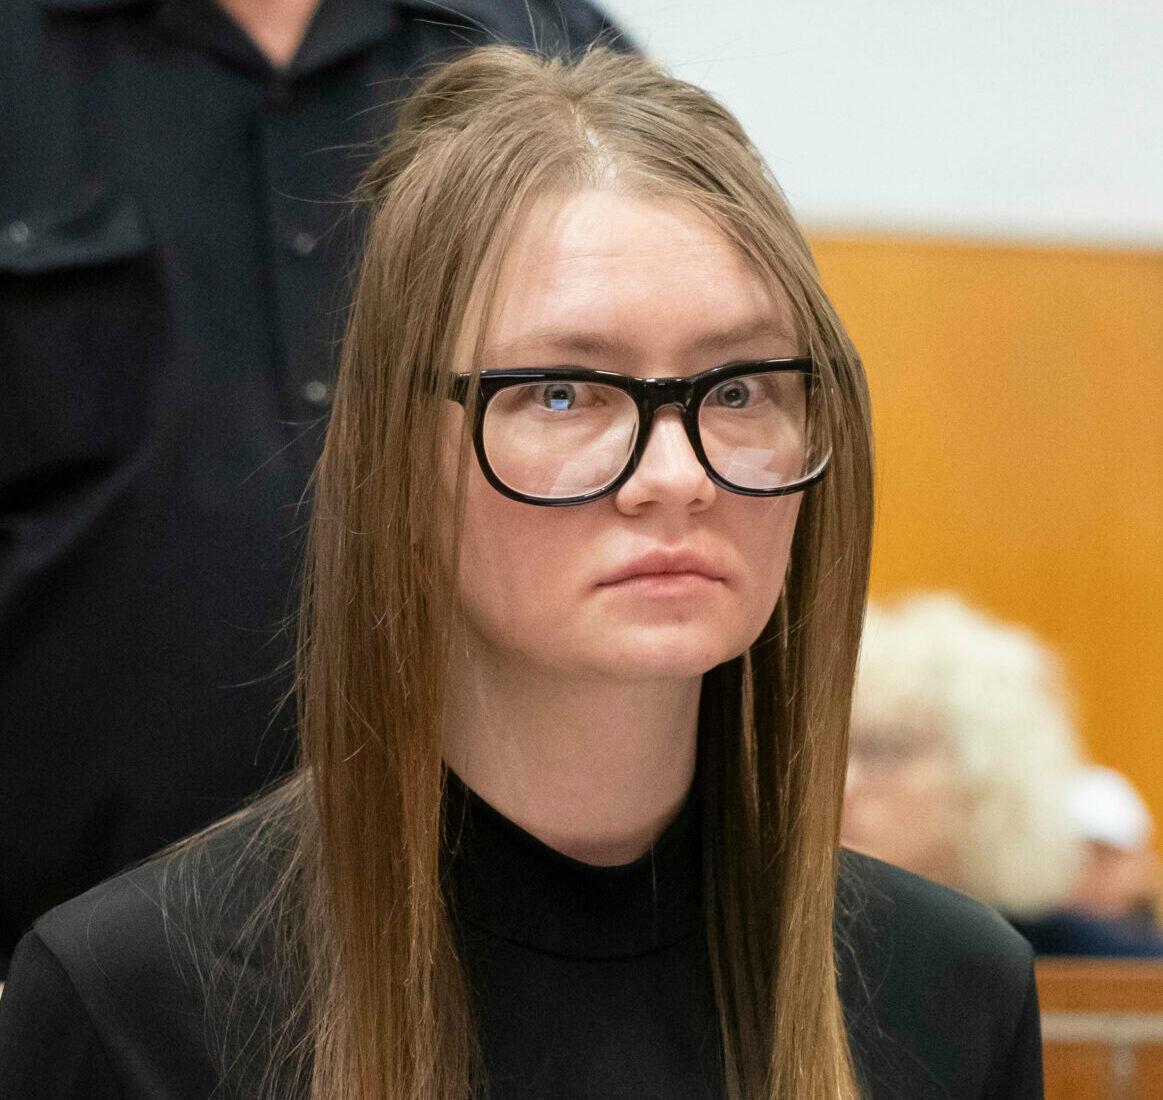 Anna Sorokin sentenced to 4-12 years prison